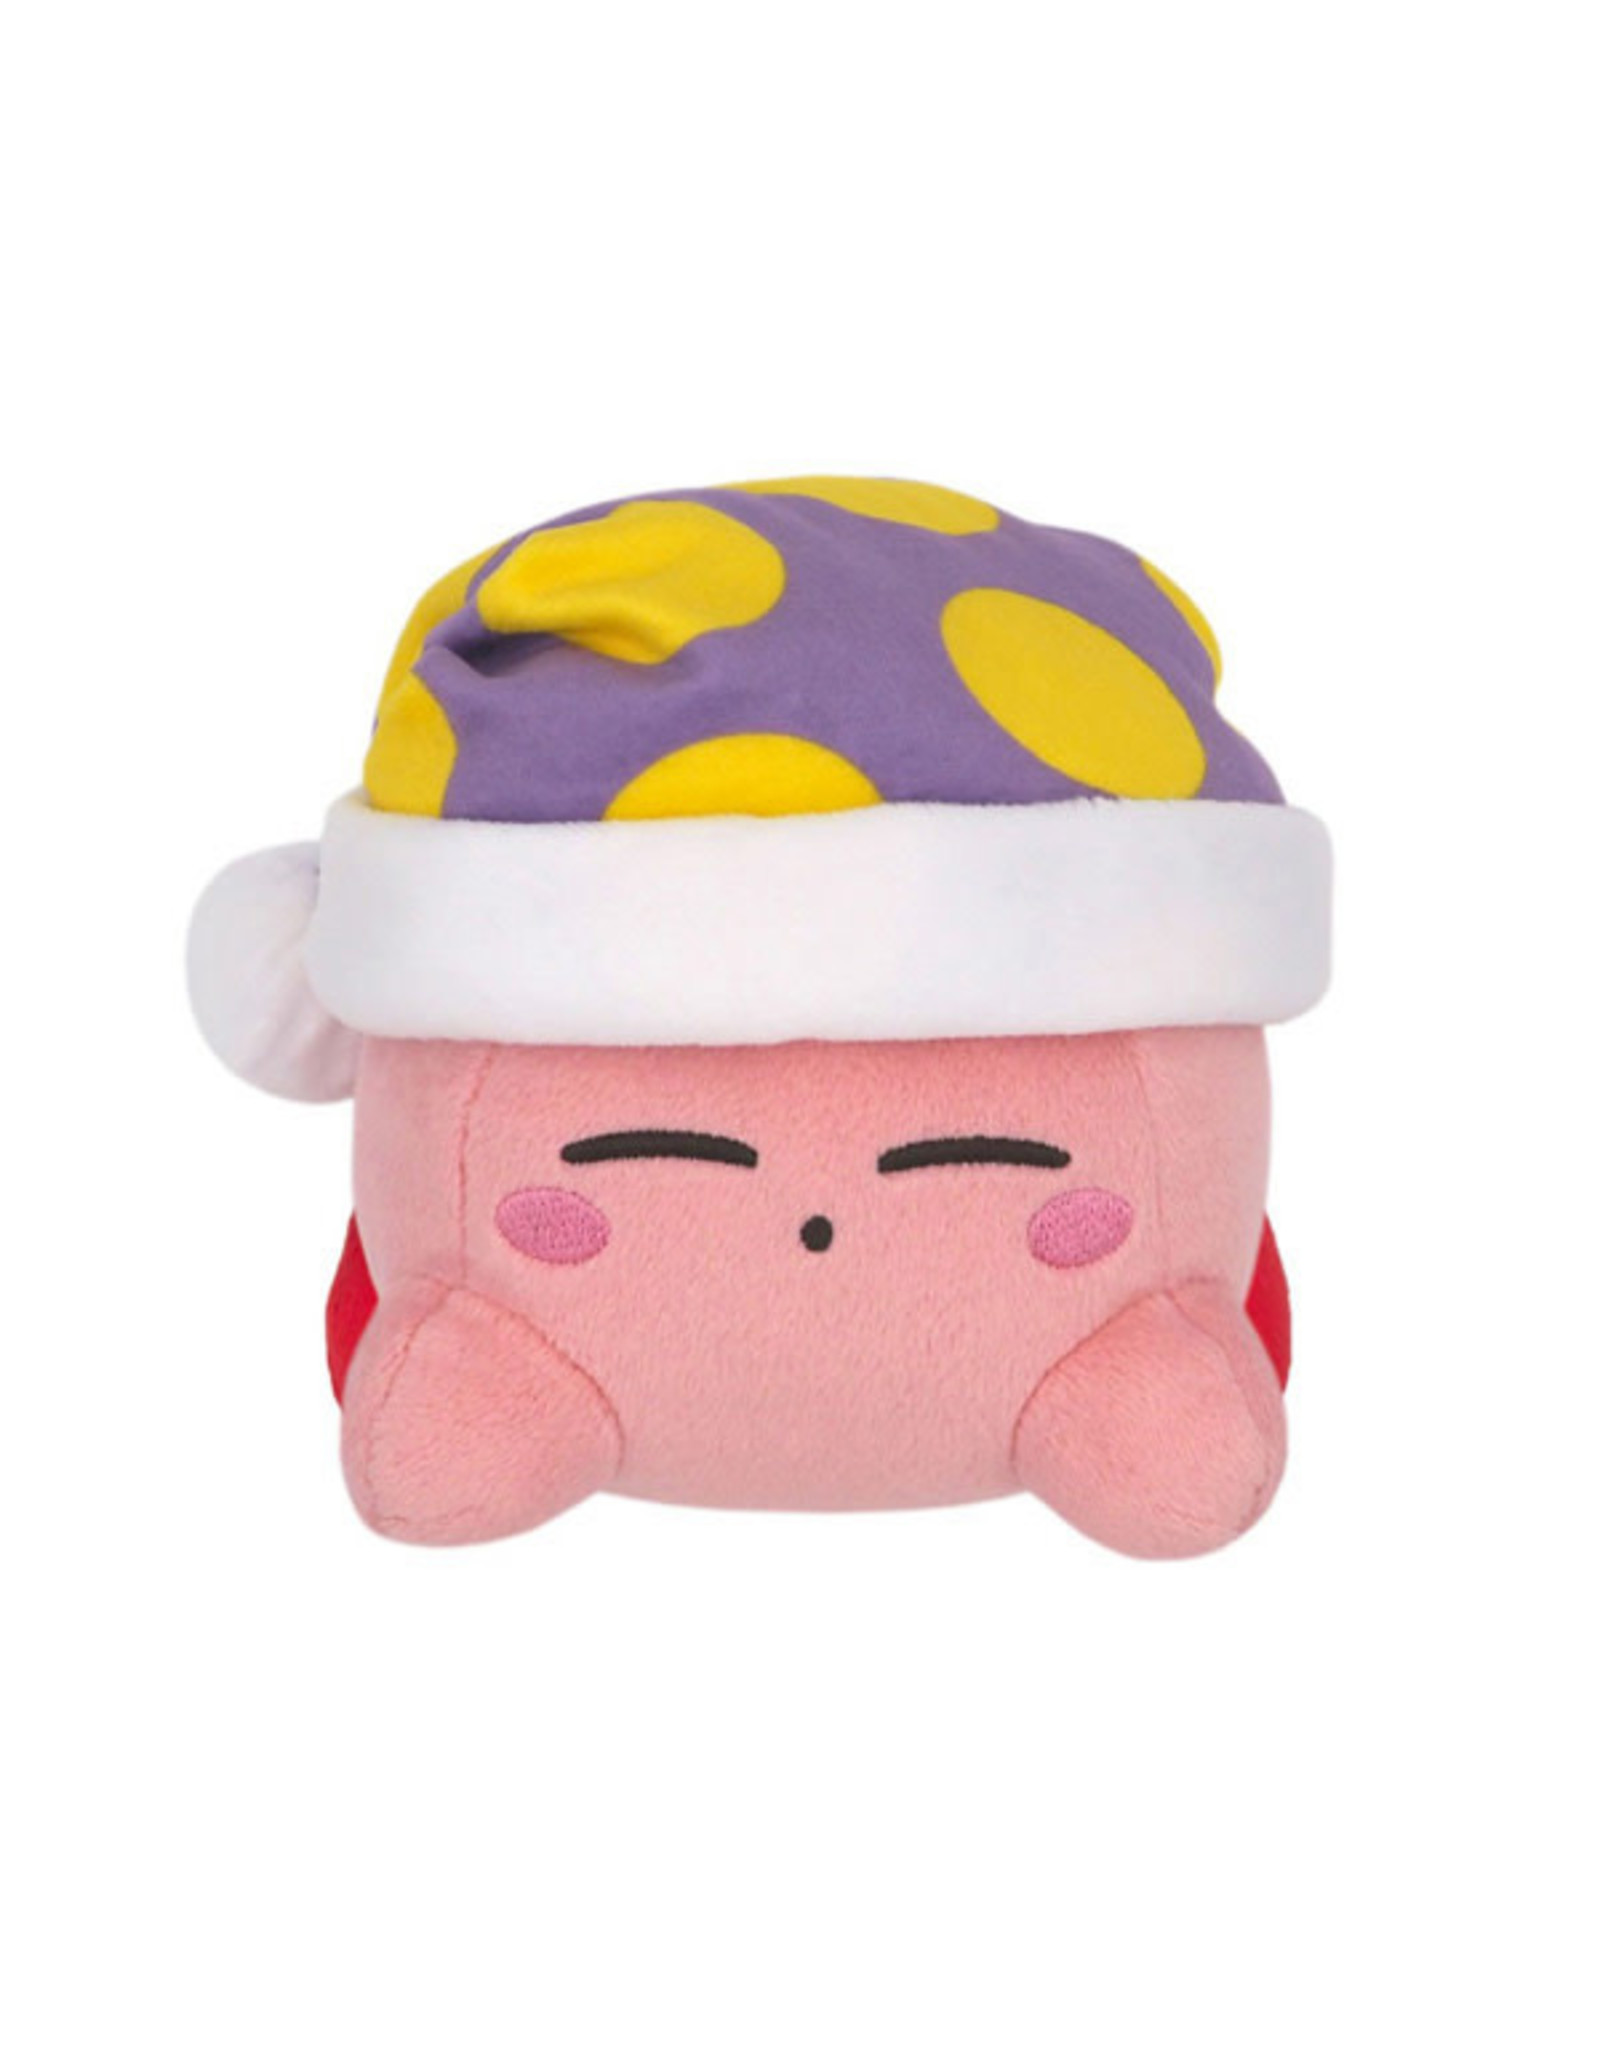 Sanei Sanei- Kirby's Dreamland All Star Collection - Sleeping Kirby - Small Plush